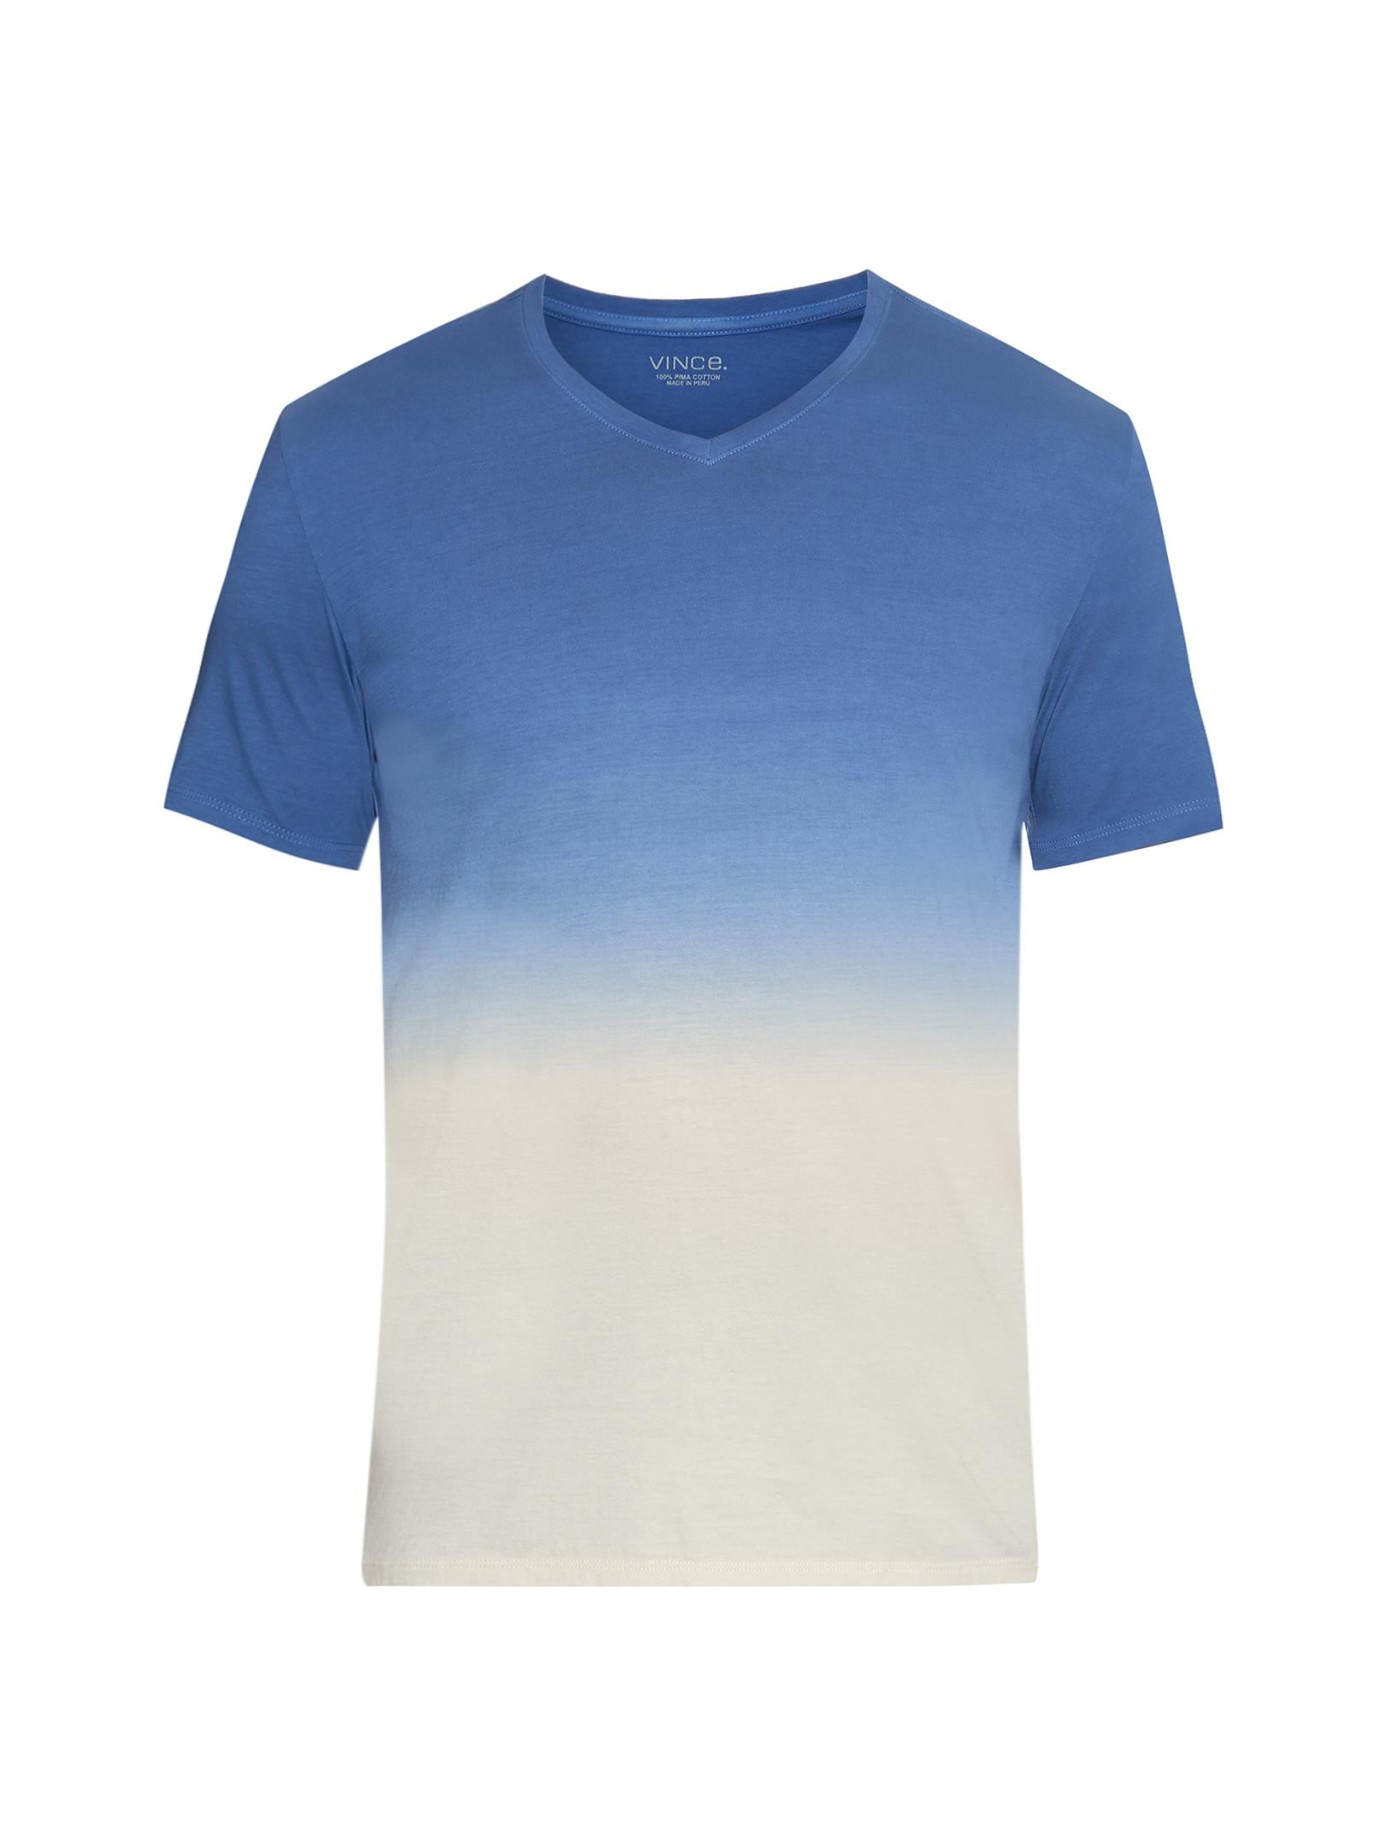 Vince Dip-Dye Cotton-Jersey T-Shirt in Blue for Men - Lyst